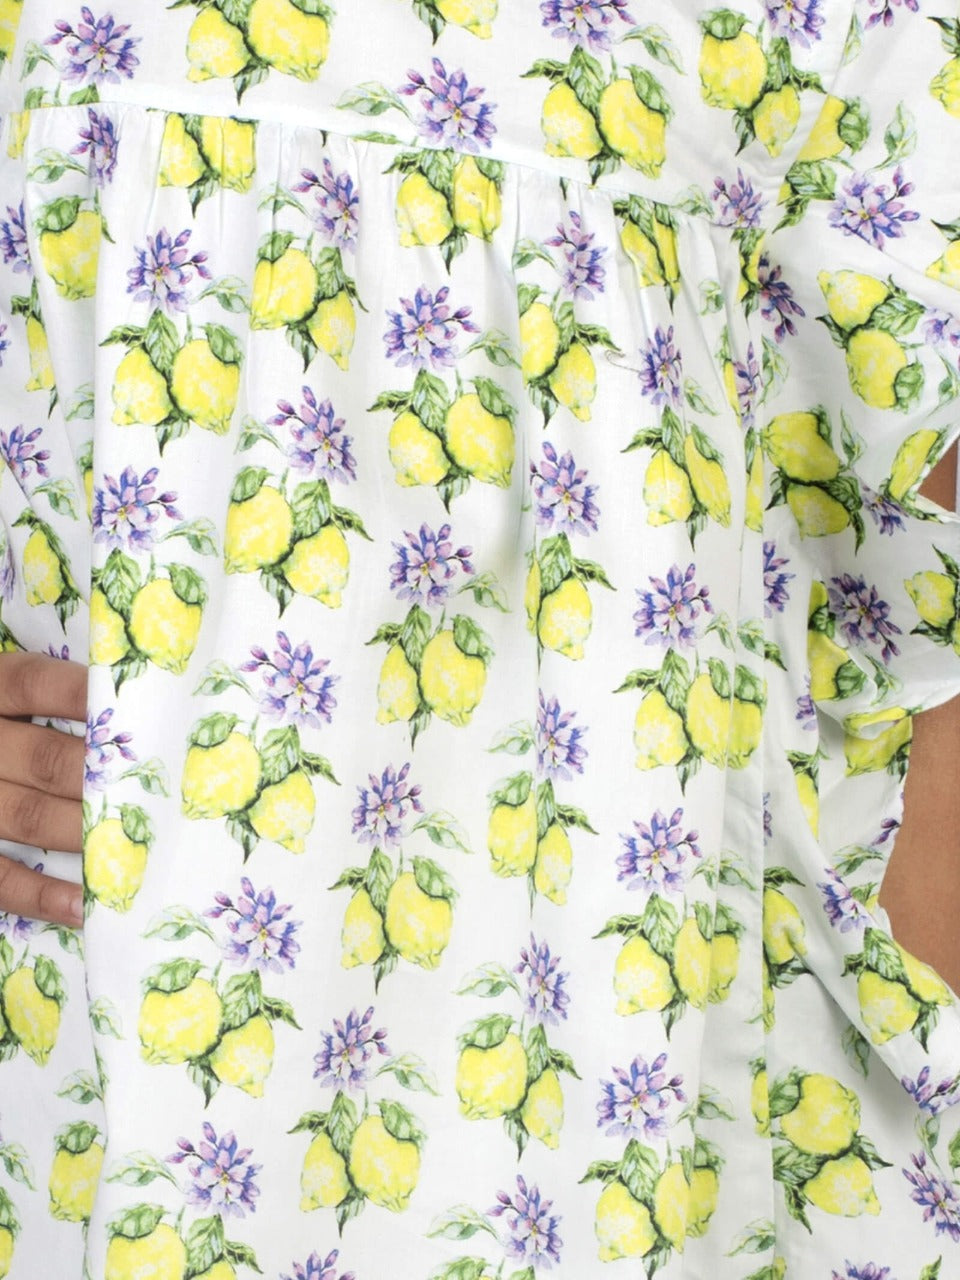 Lemon Dress Print